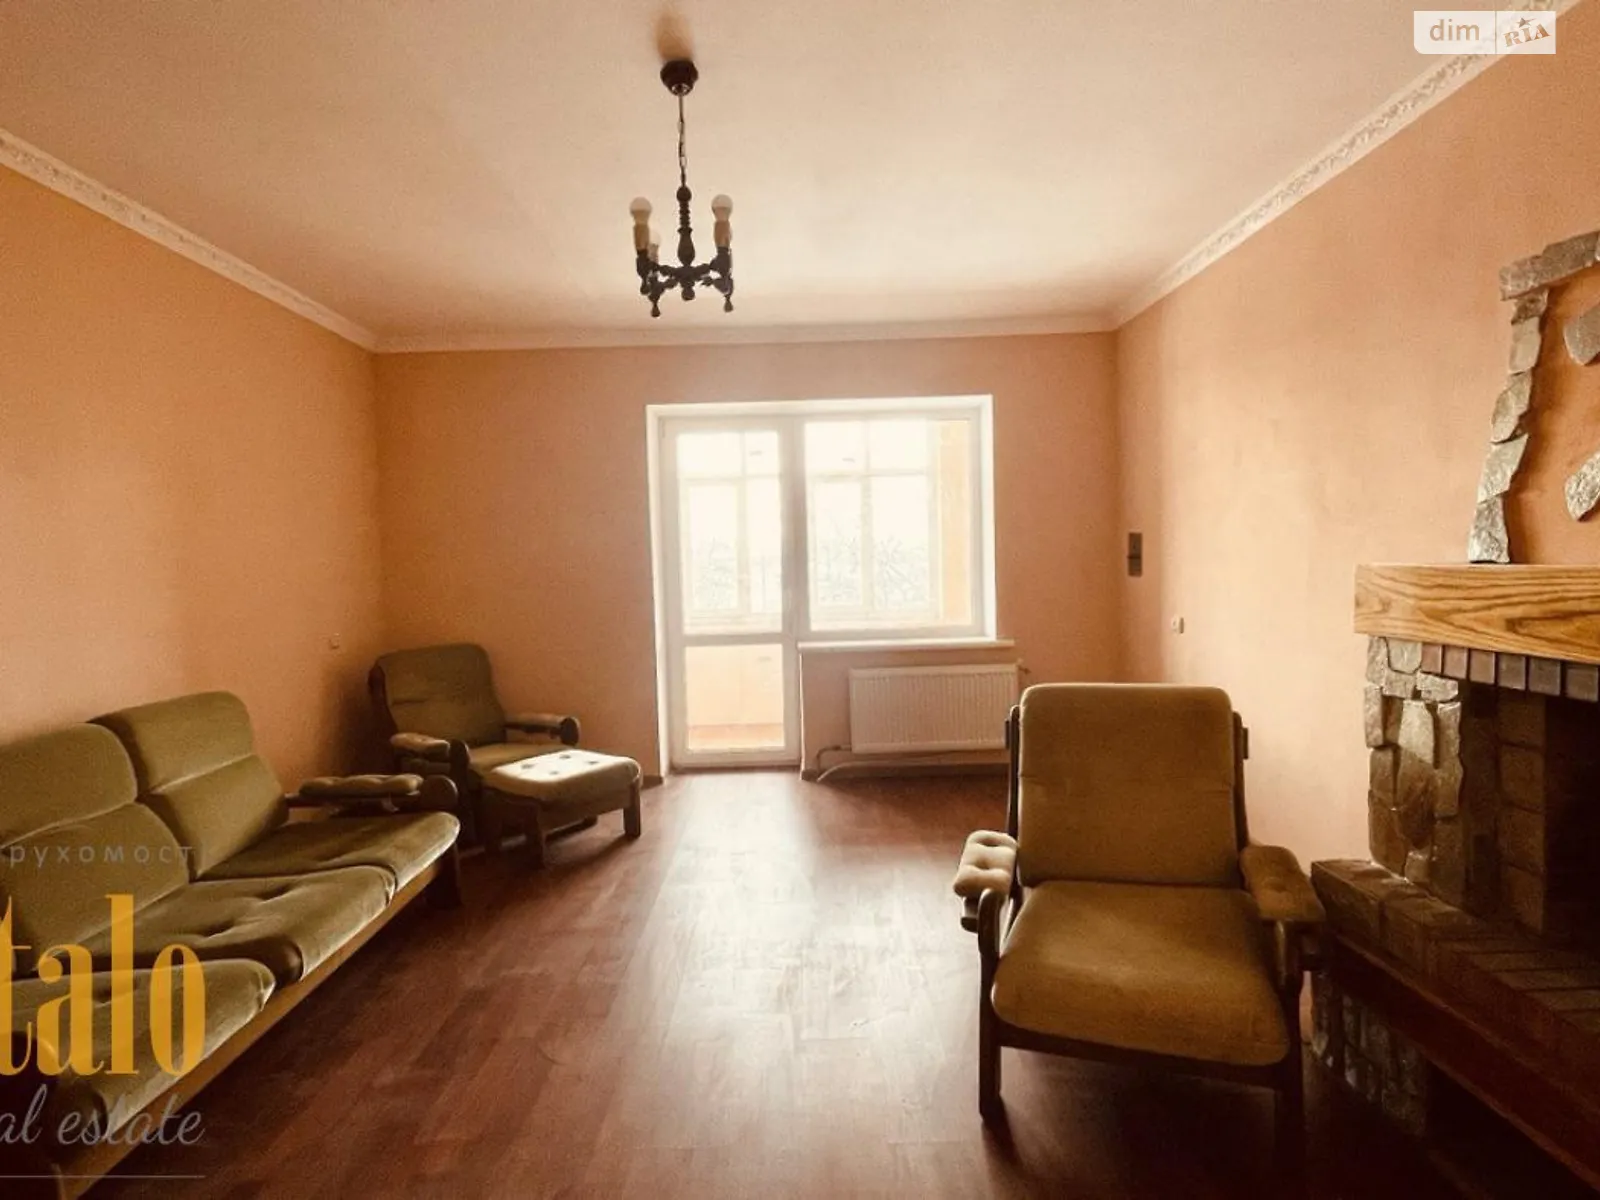 Продается 4-комнатная квартира 123 кв. м в Ивано-Франковске - фото 3